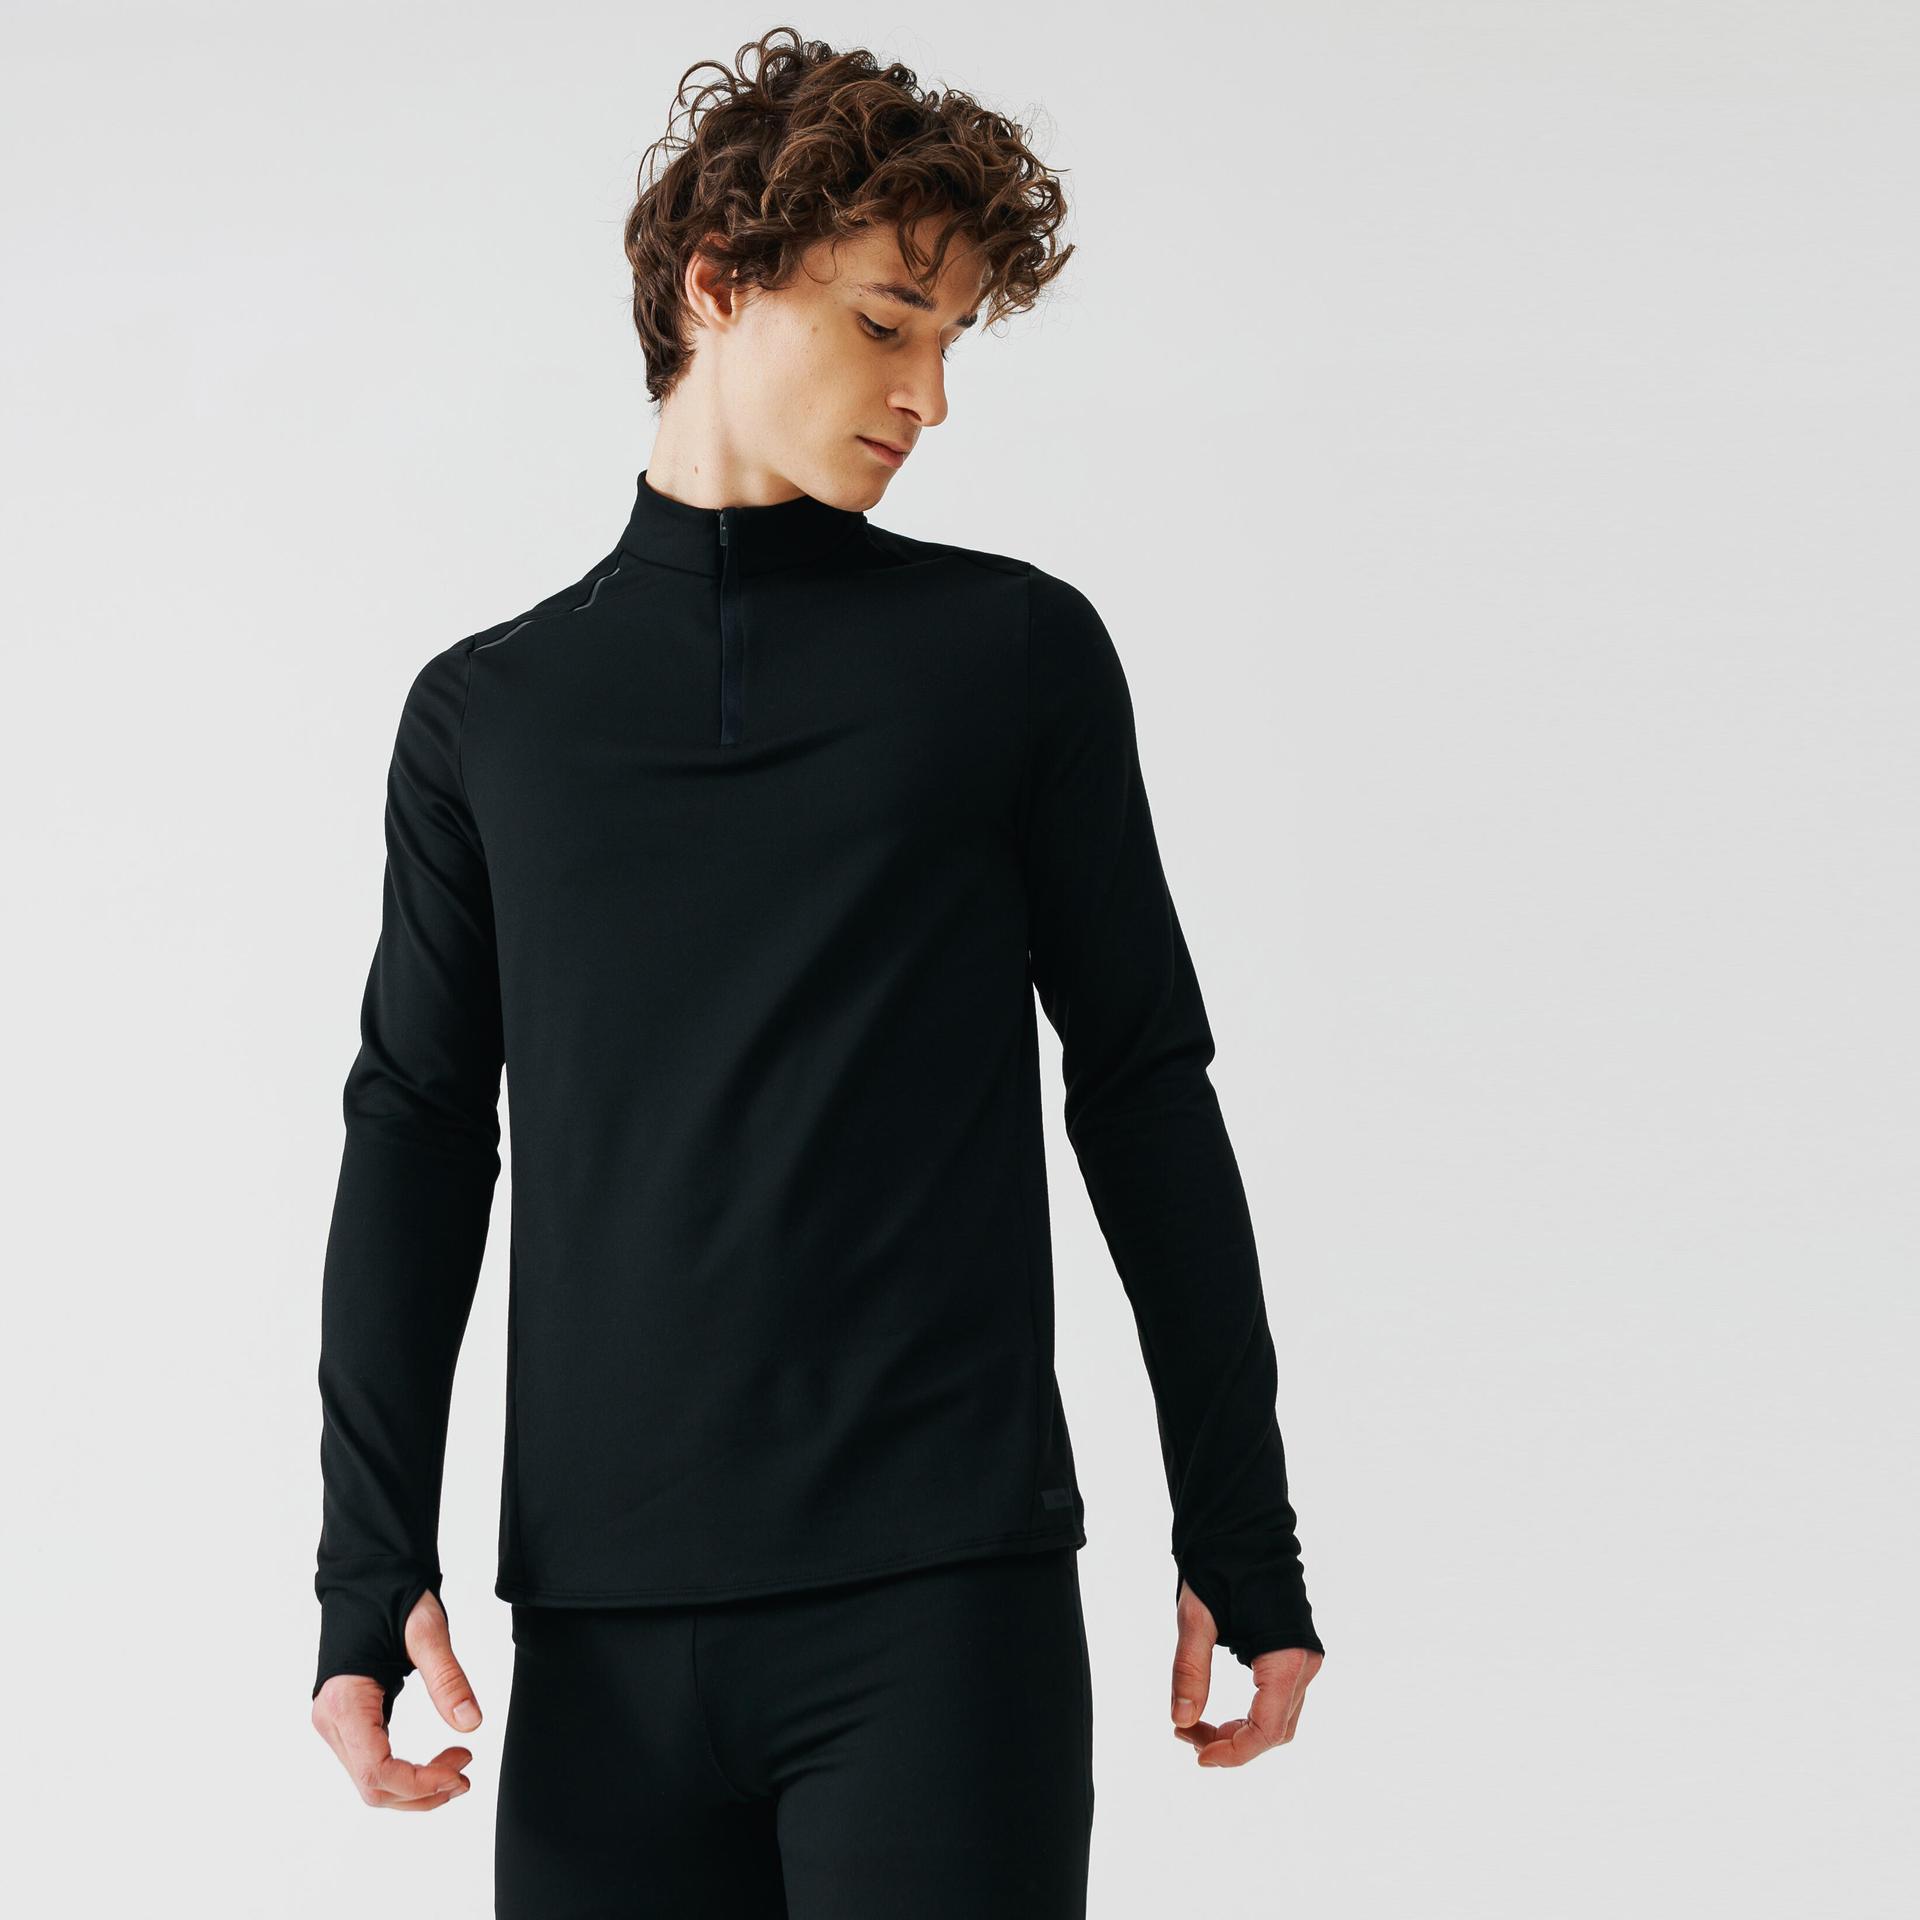 men's-warm-long-sleeved-running-t-shirt--black